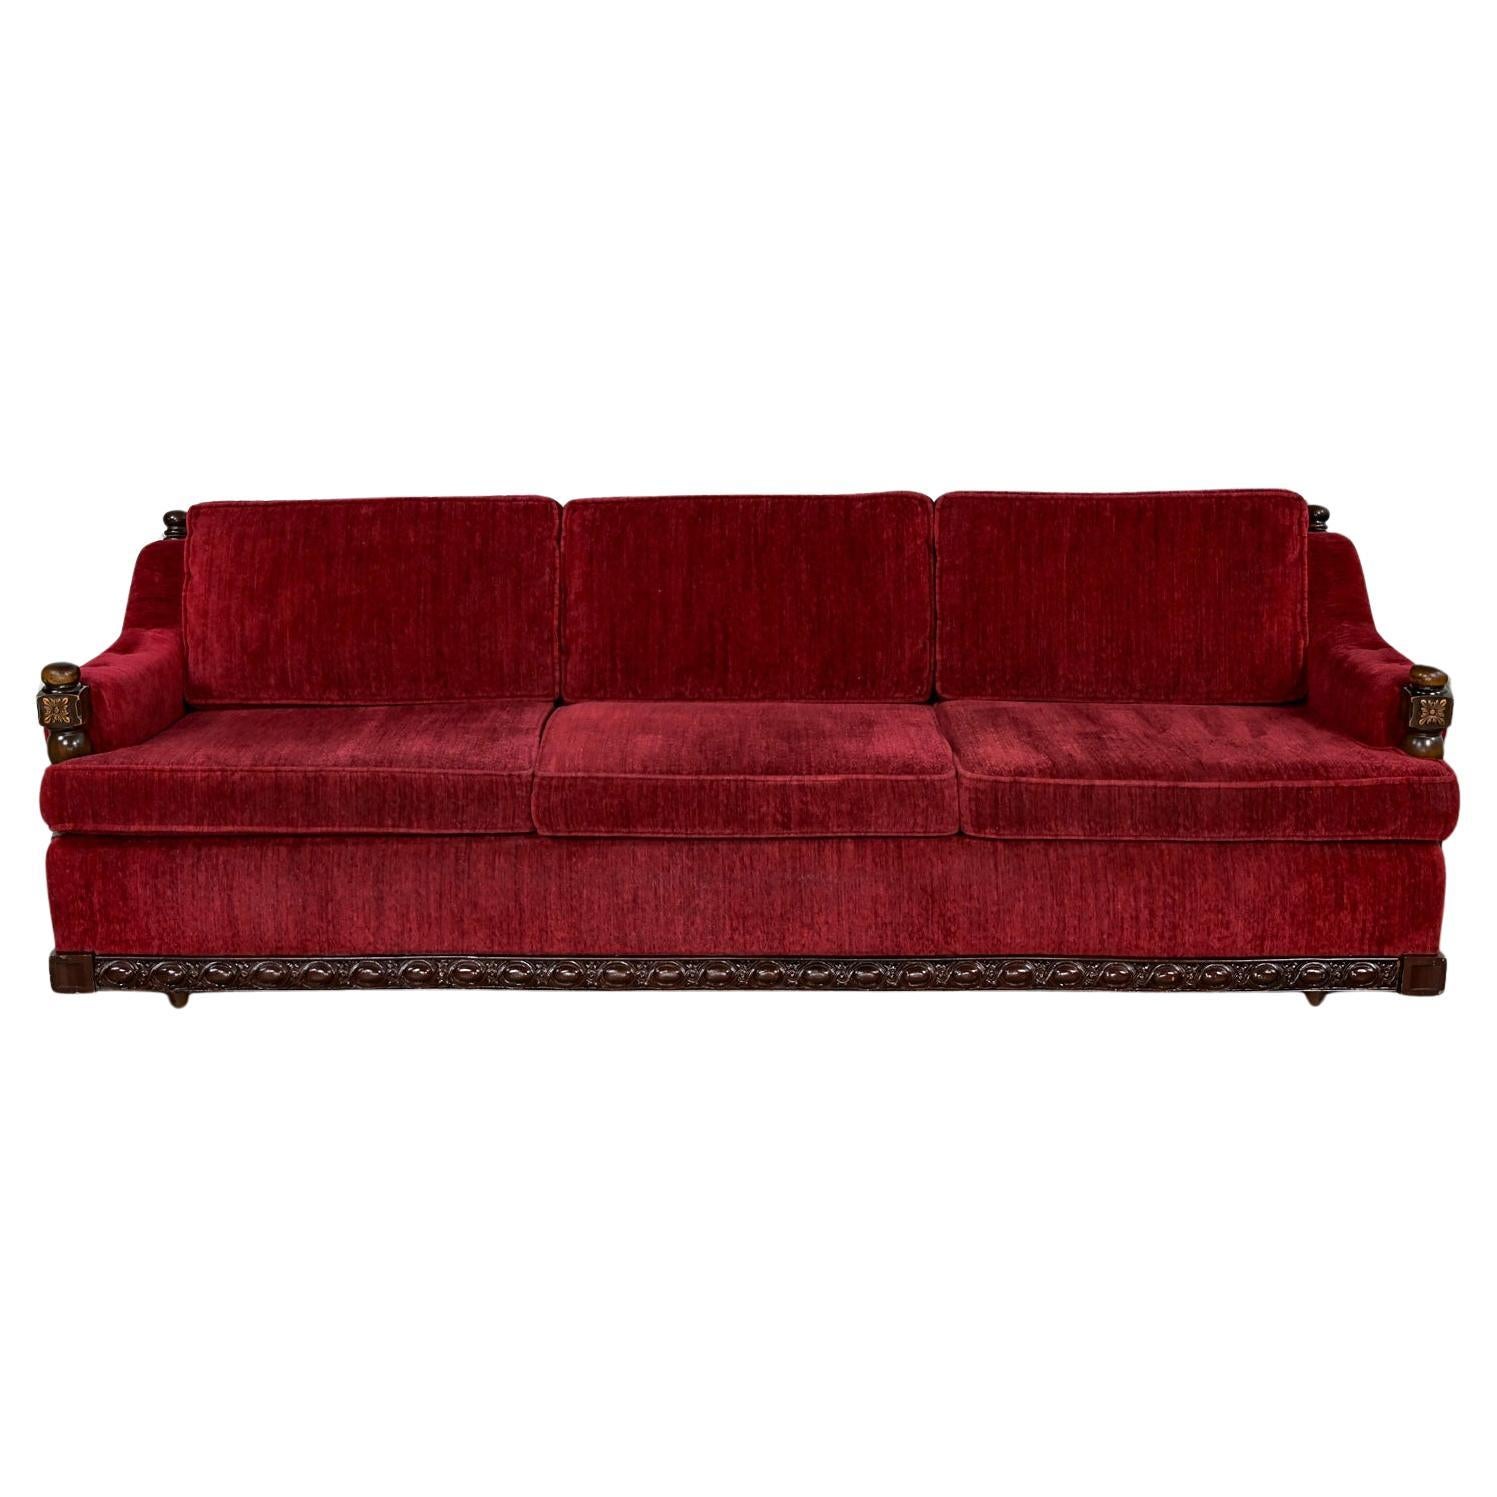 1970's Spanish Revival Rustic Red Chenille Sofa Style Artes De Mexico Internls For Sale